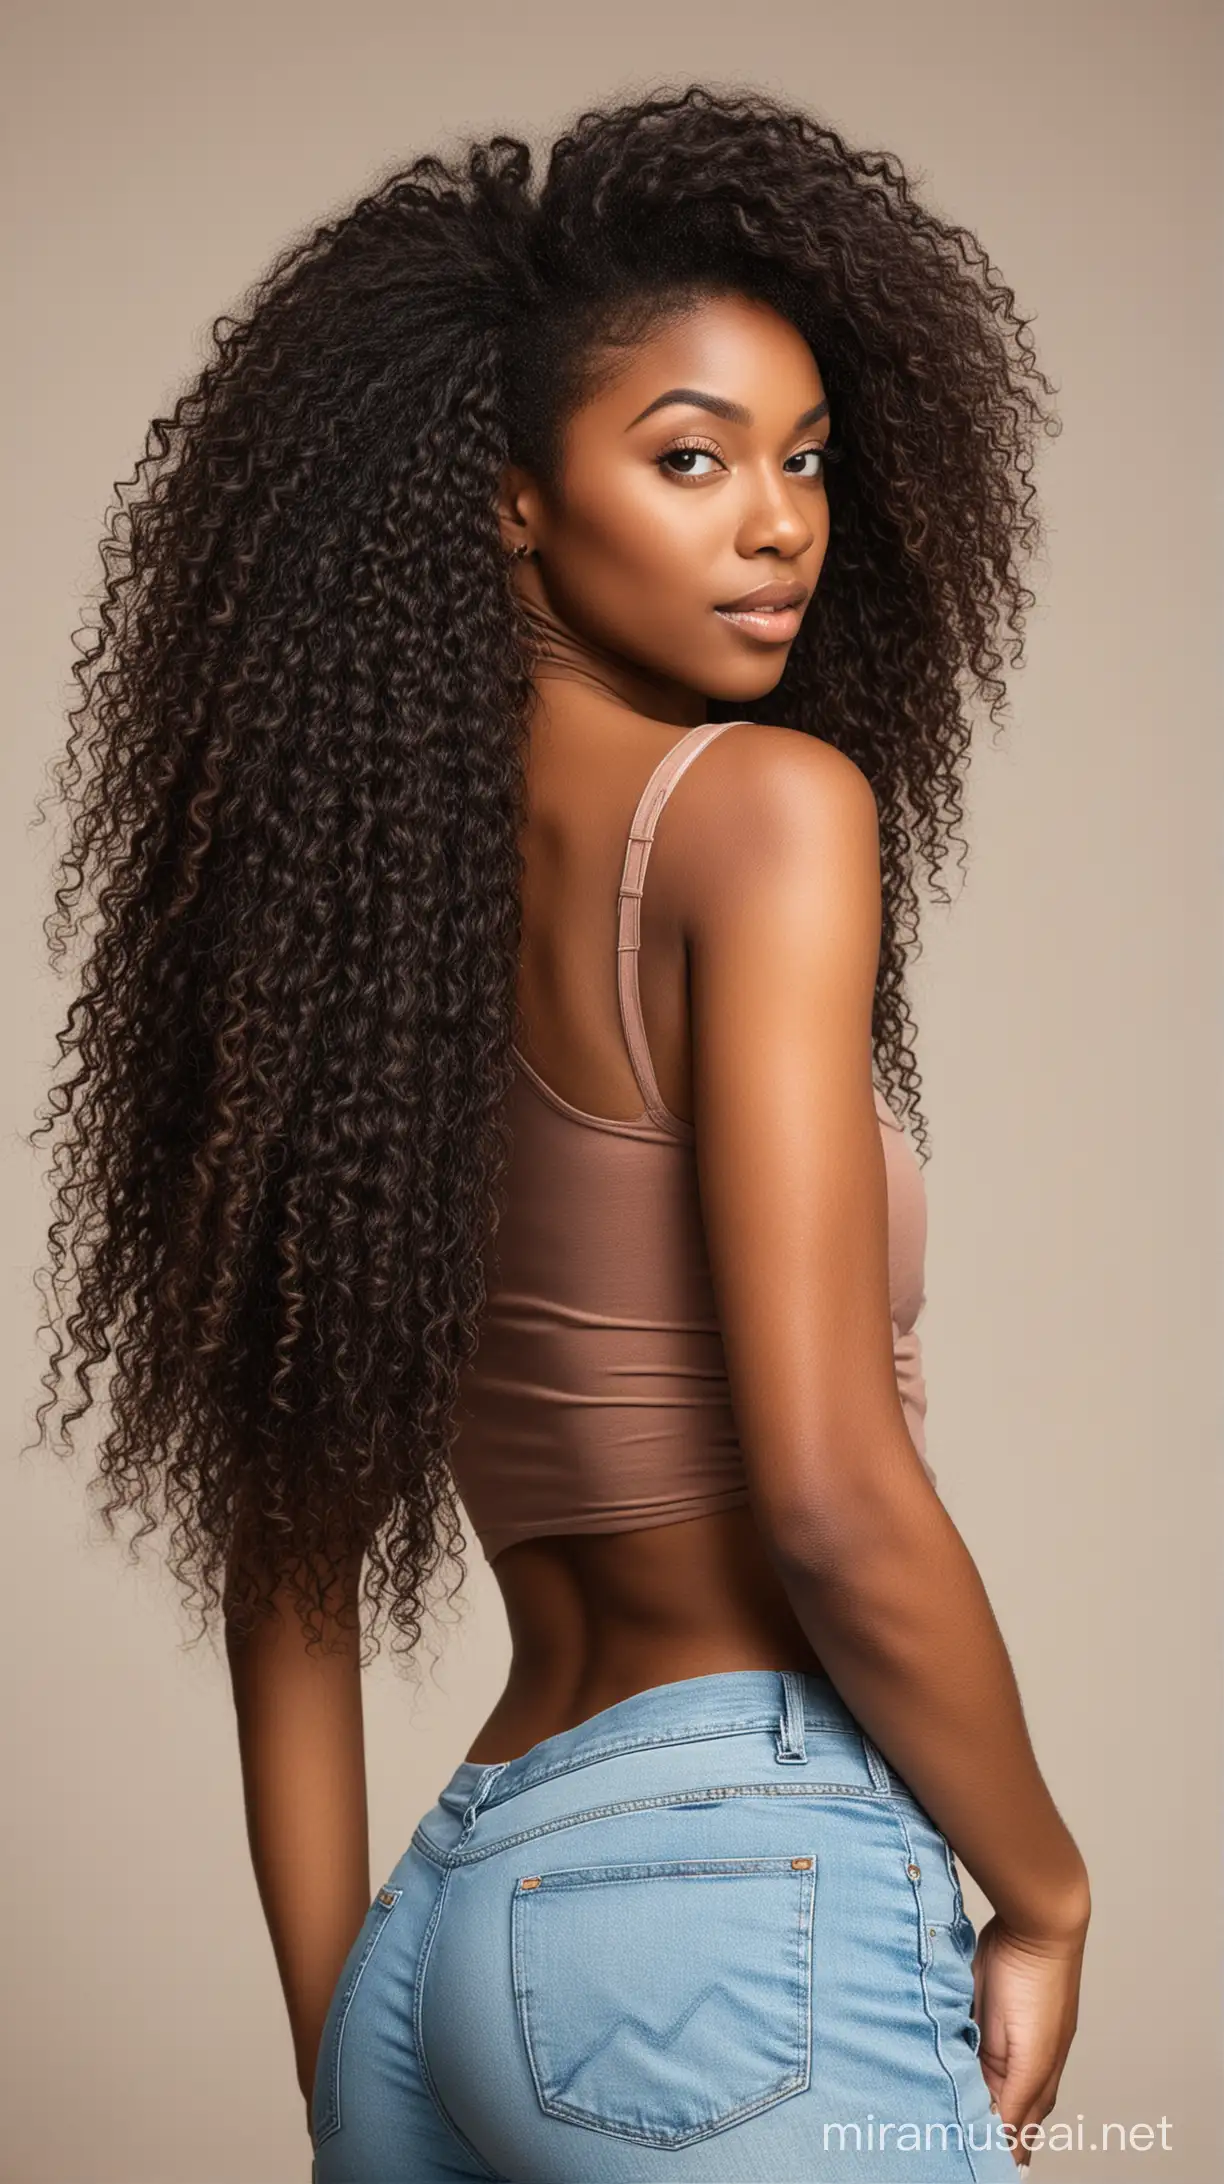 Beautiful Black Woman with Elegant Hair Standing Gracefully